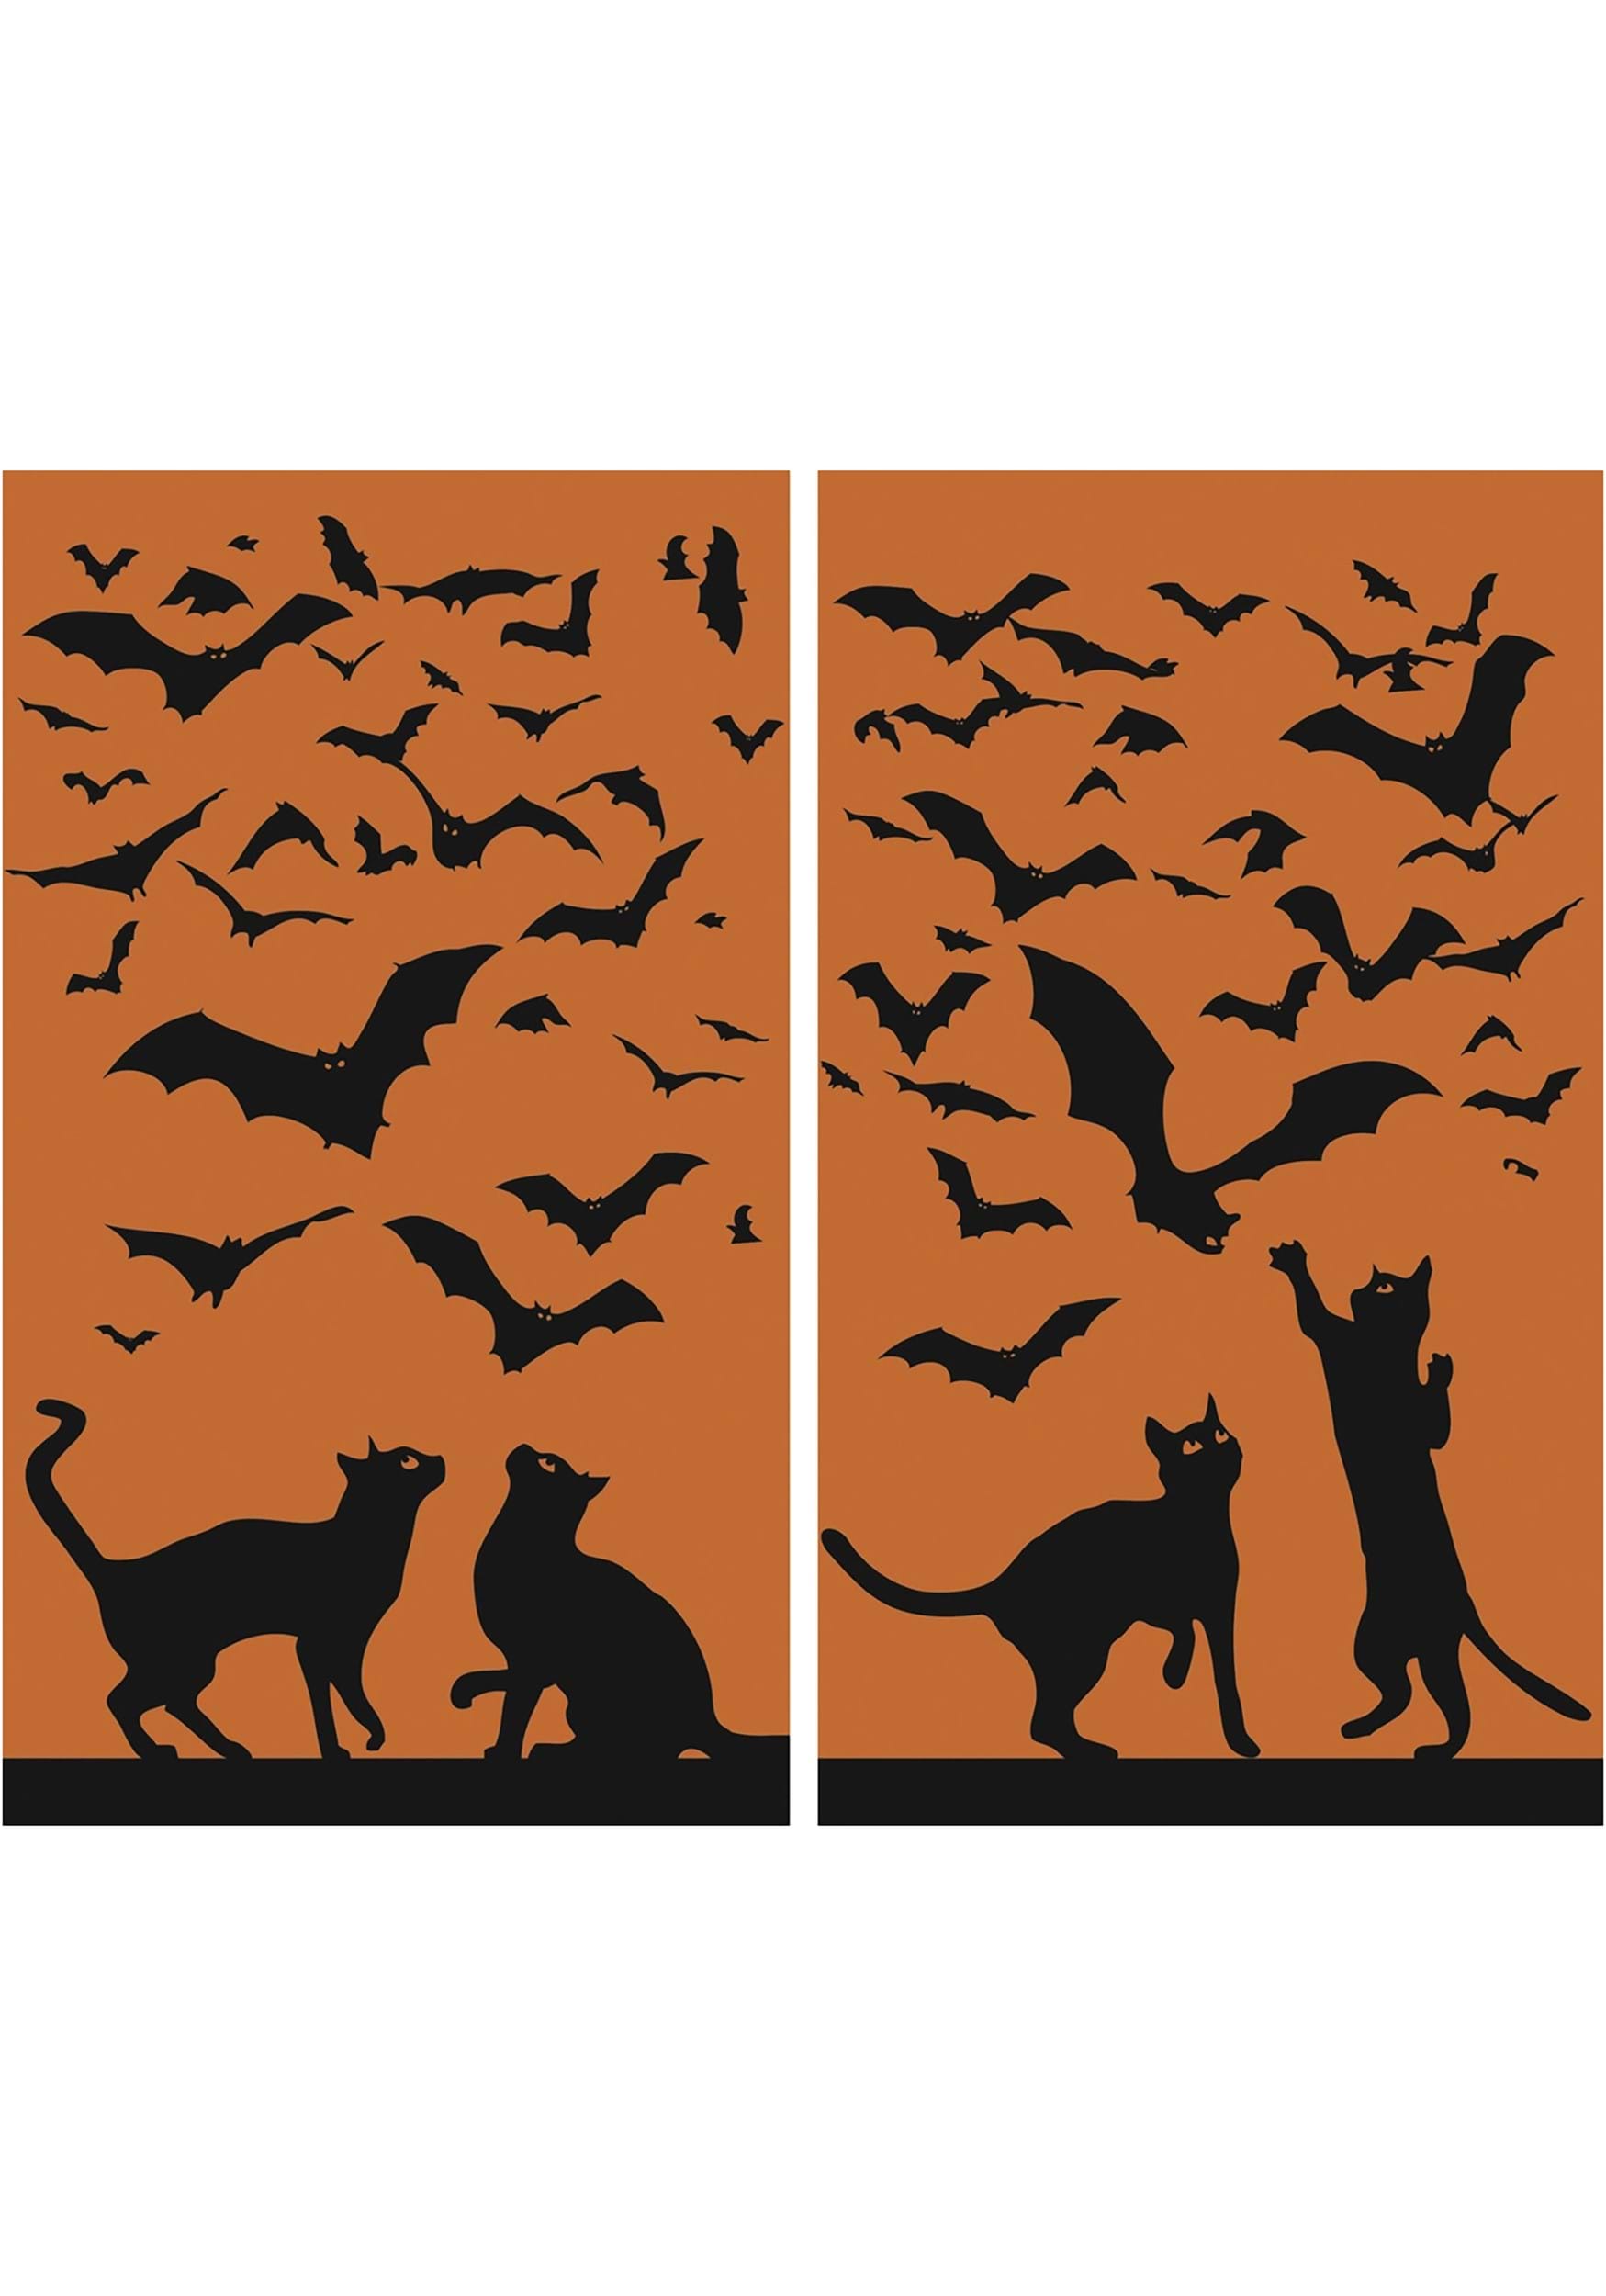 Cats & Bats Silhouette Window Poster Decoration